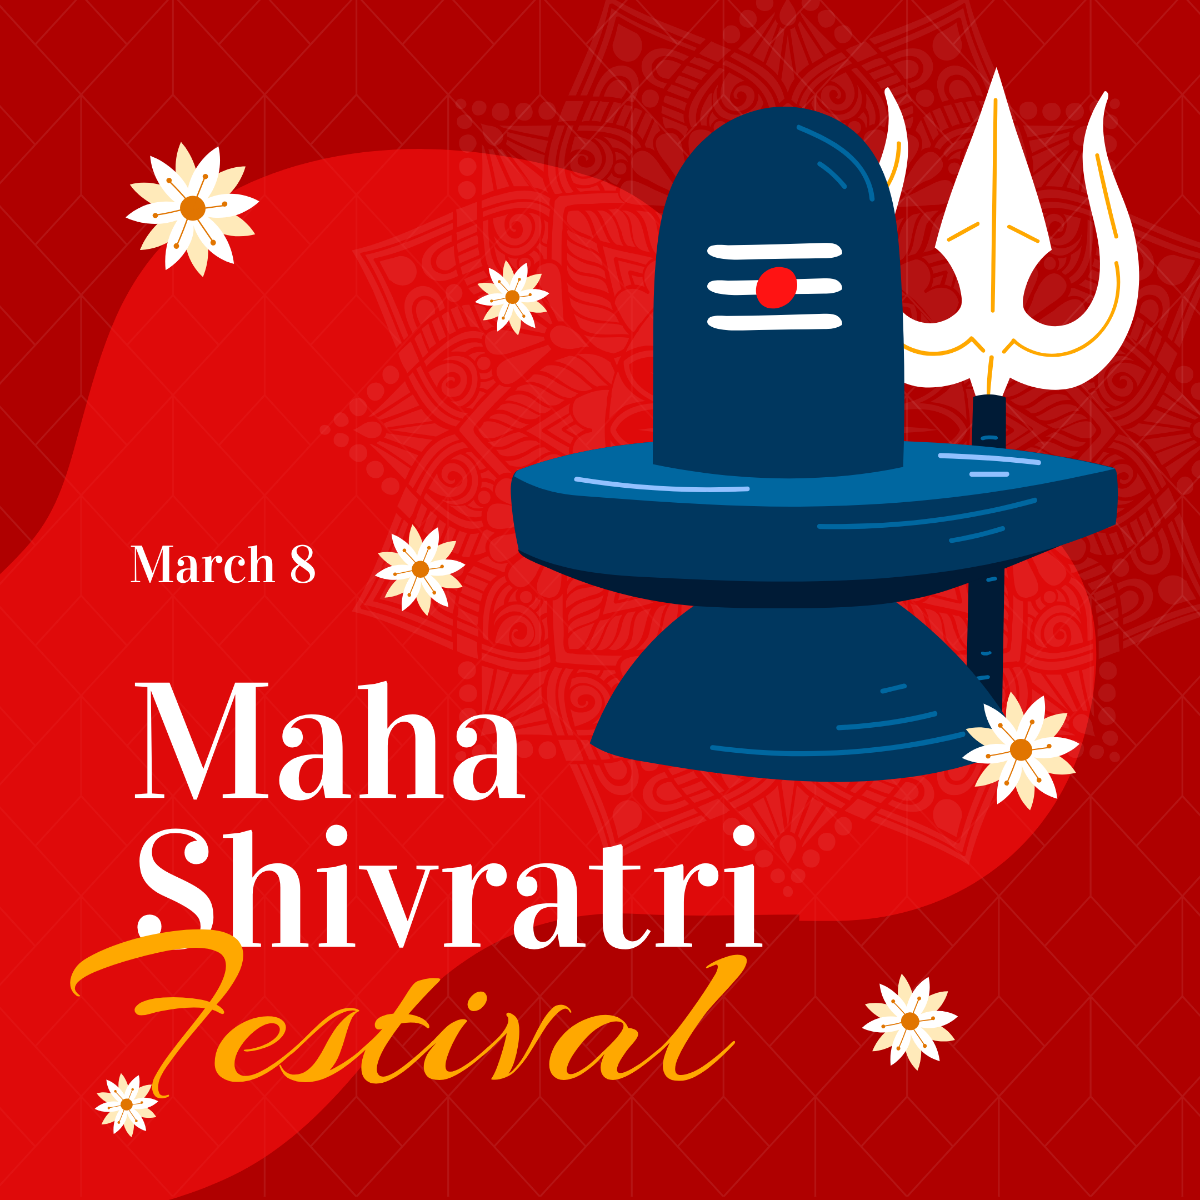 Maha Shivratri Festival Instagram Post